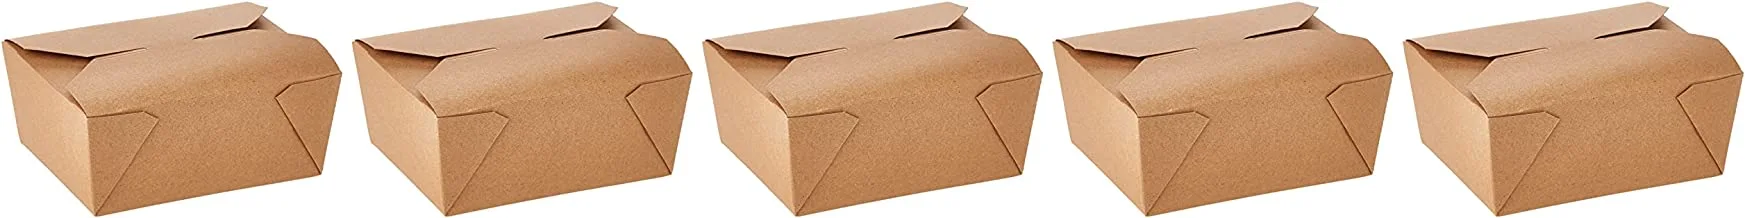 Hotpack Kraft PE Take Away Box 32 أونصة - 5 قطع